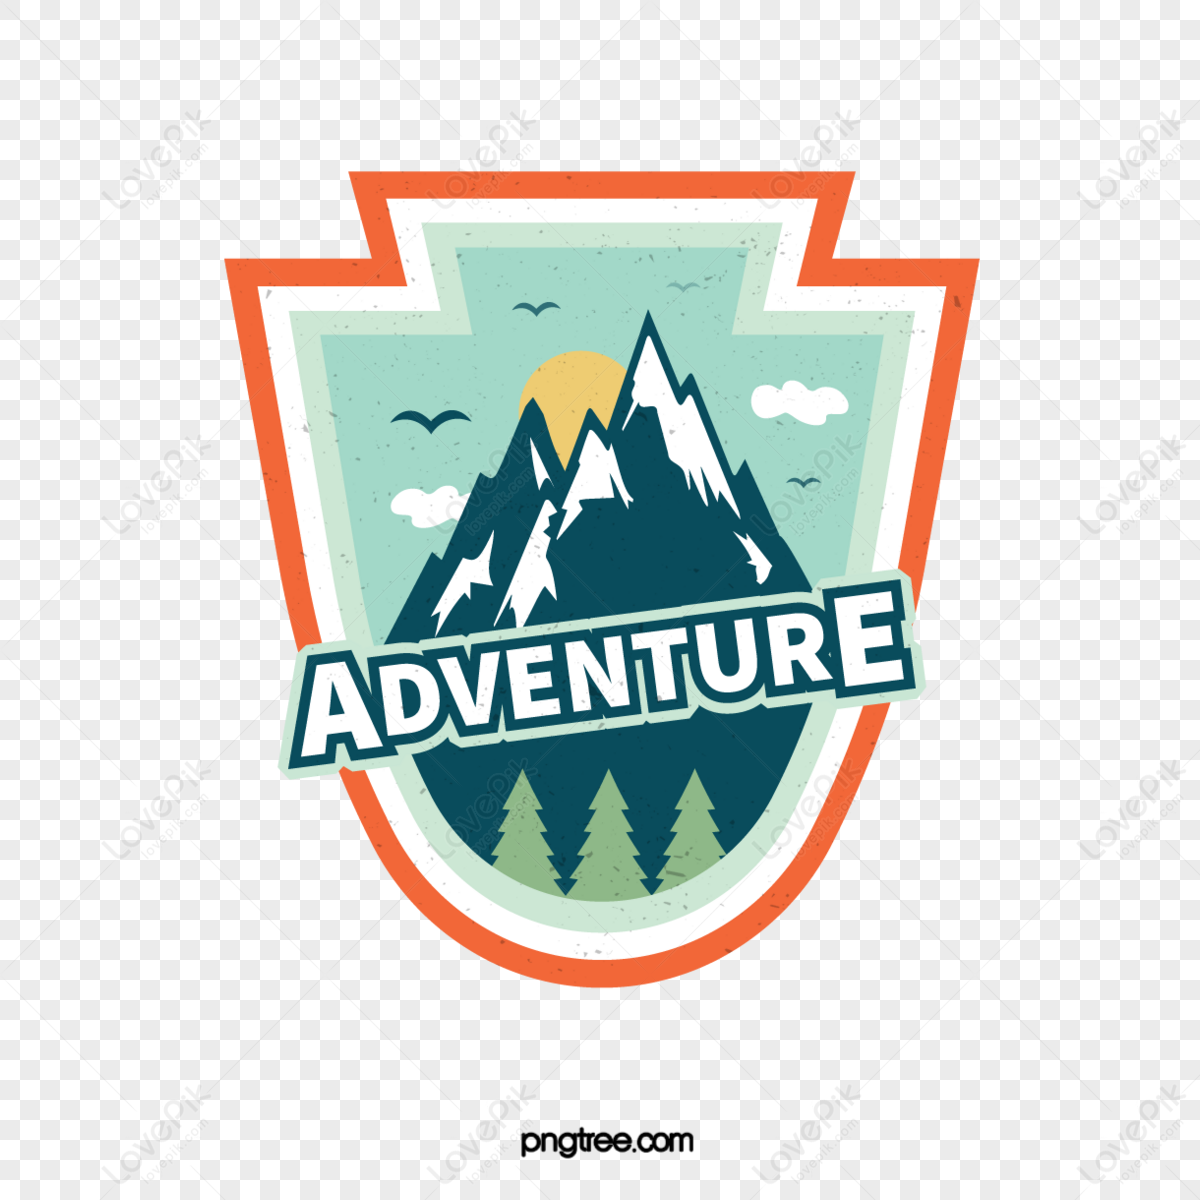 Adventure Logos - 729+ Best Adventure Logo Ideas. Free Adventure Logo  Maker. | 99designs